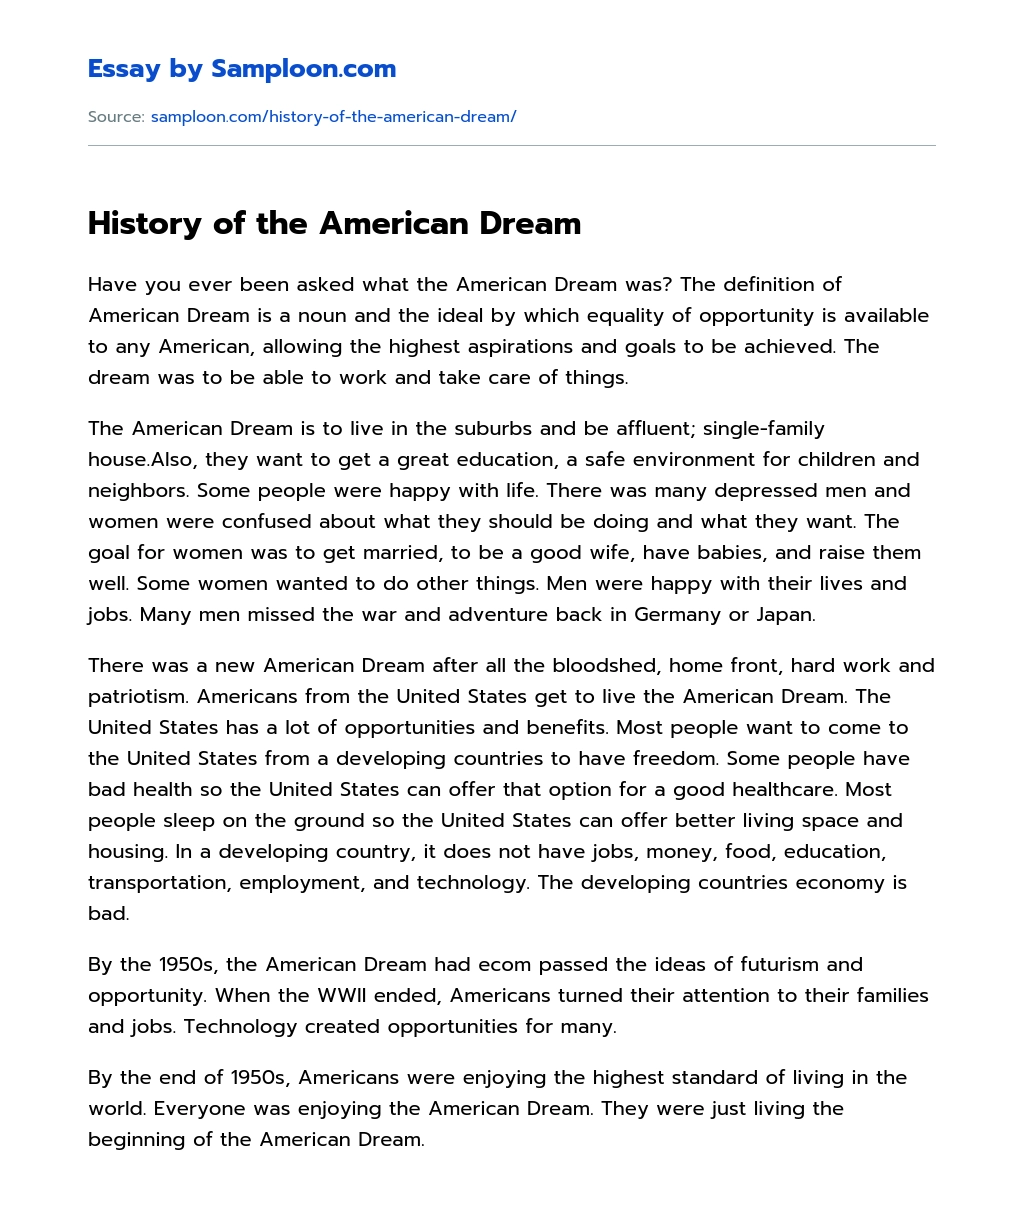 History of the American Dream essay